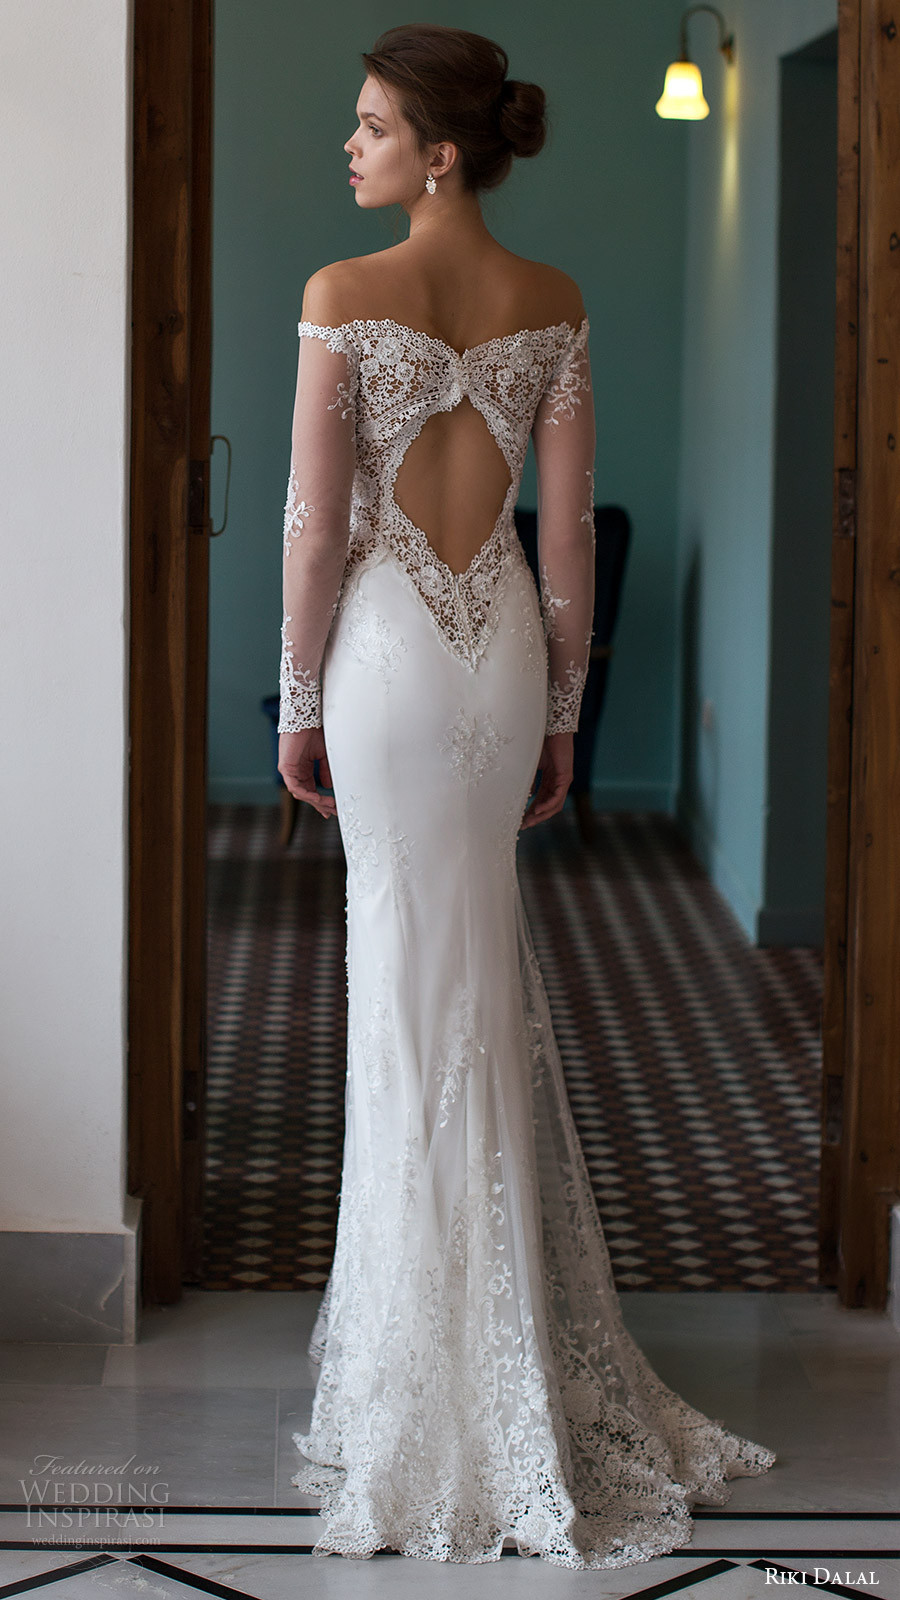 Lace Sheath Wedding Dress
 Riki Dalal 2016 Wedding Dresses — “Verona” Bridal